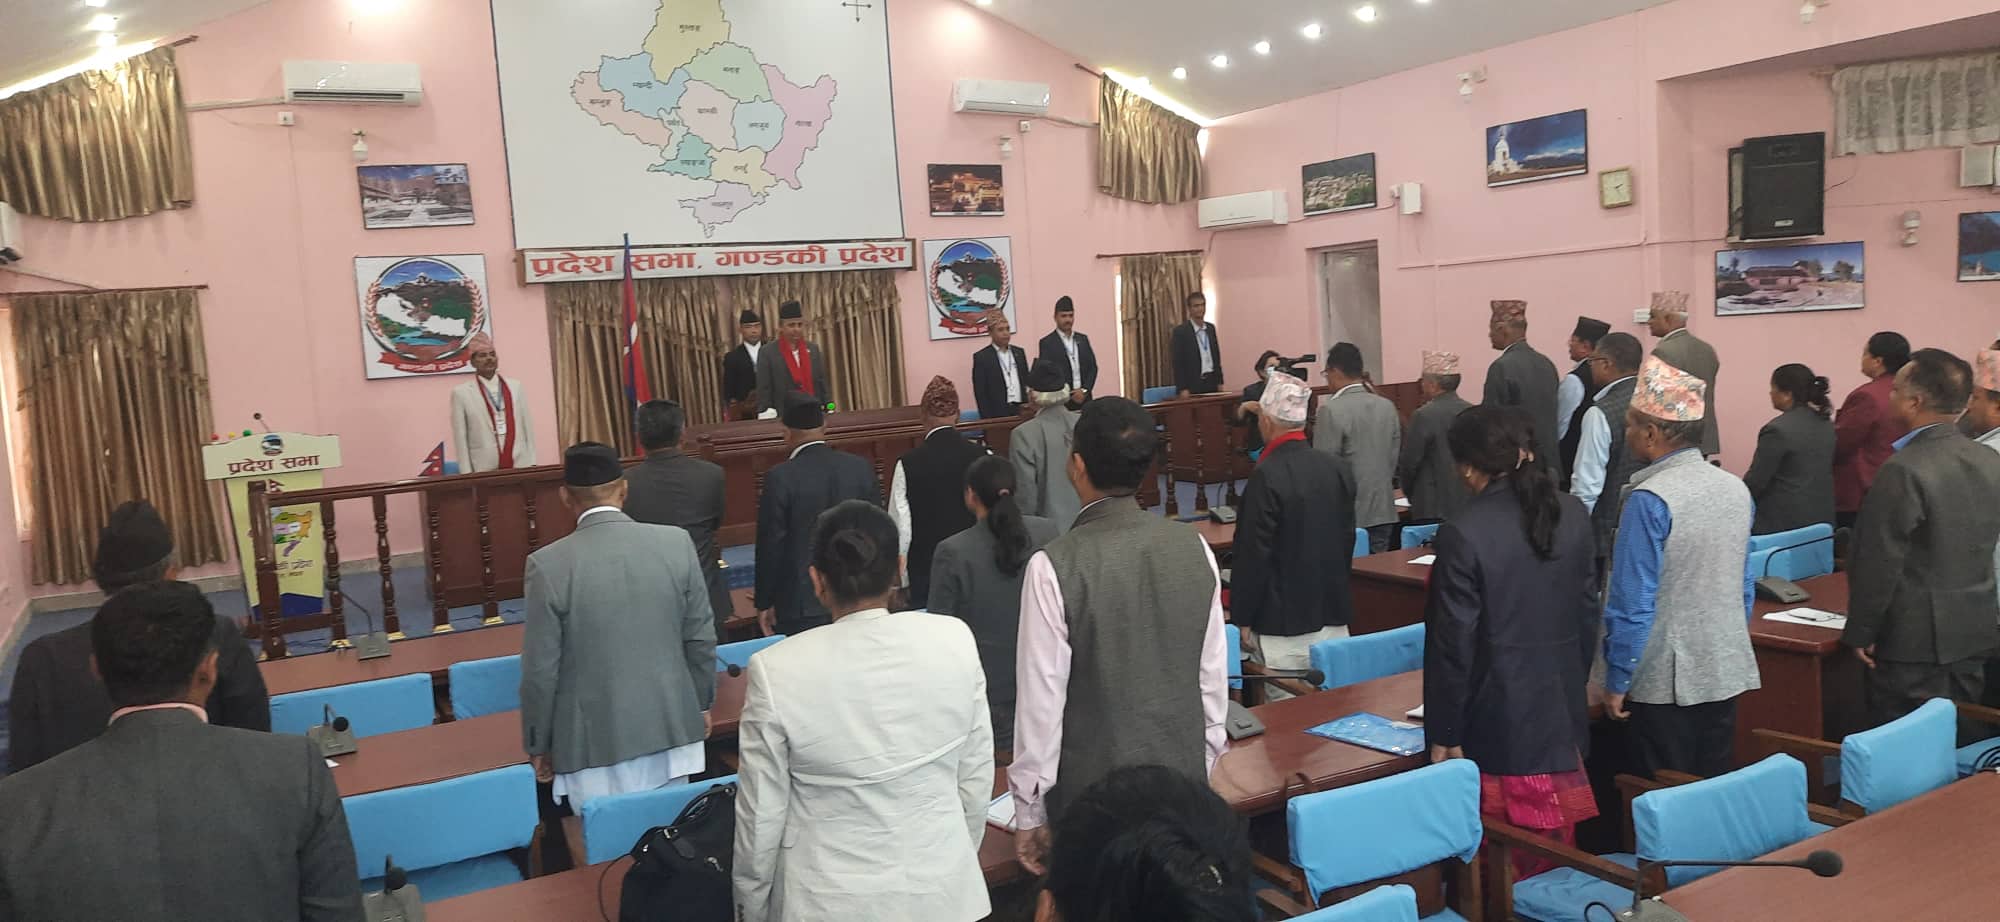 सभामुख र उपसभामुख फर्किएसँगै गण्डकी प्रदेशकाे संसद बैठक शुरू